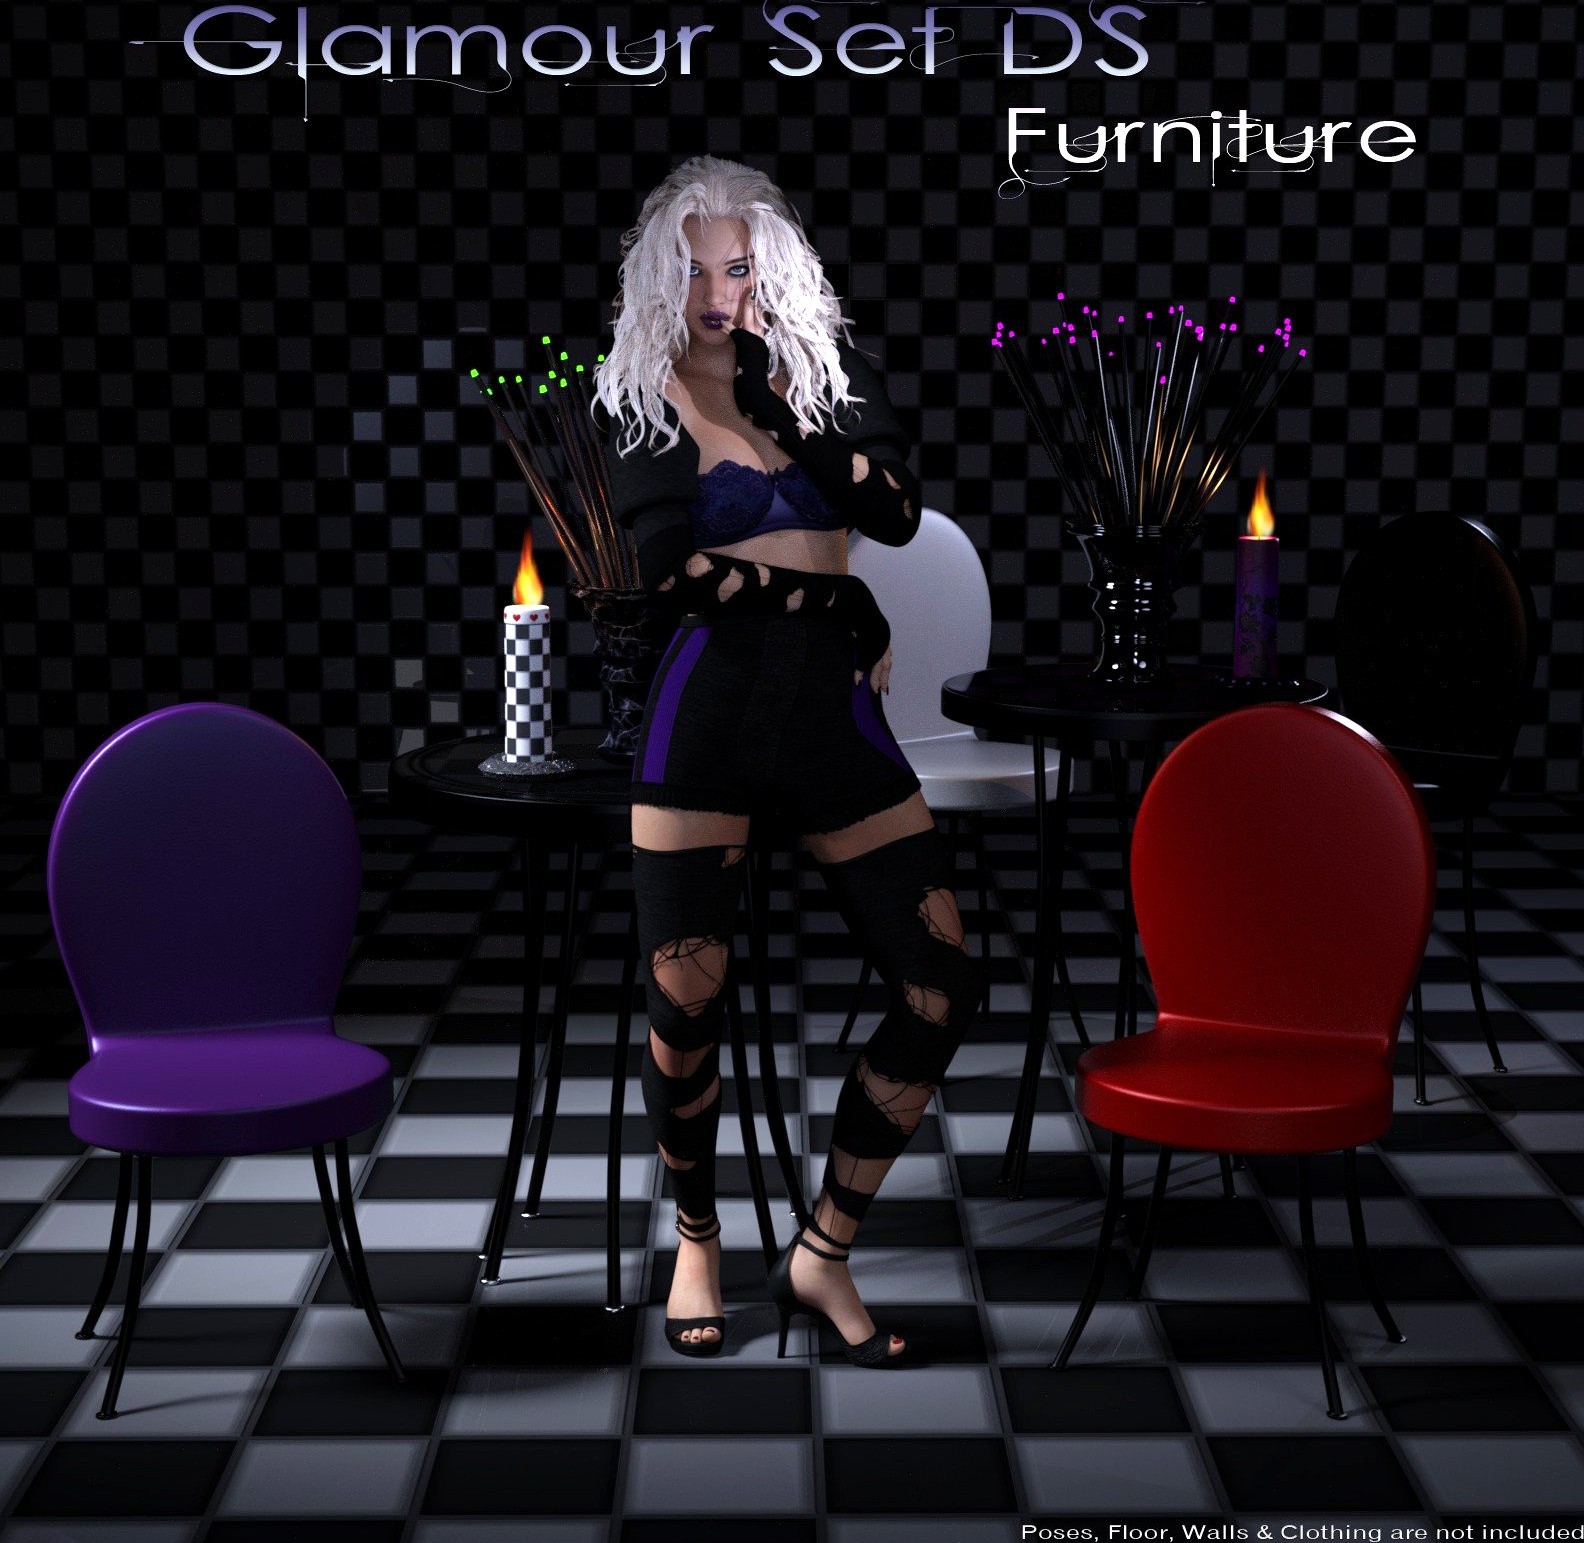 Glamour Set DS Furniture